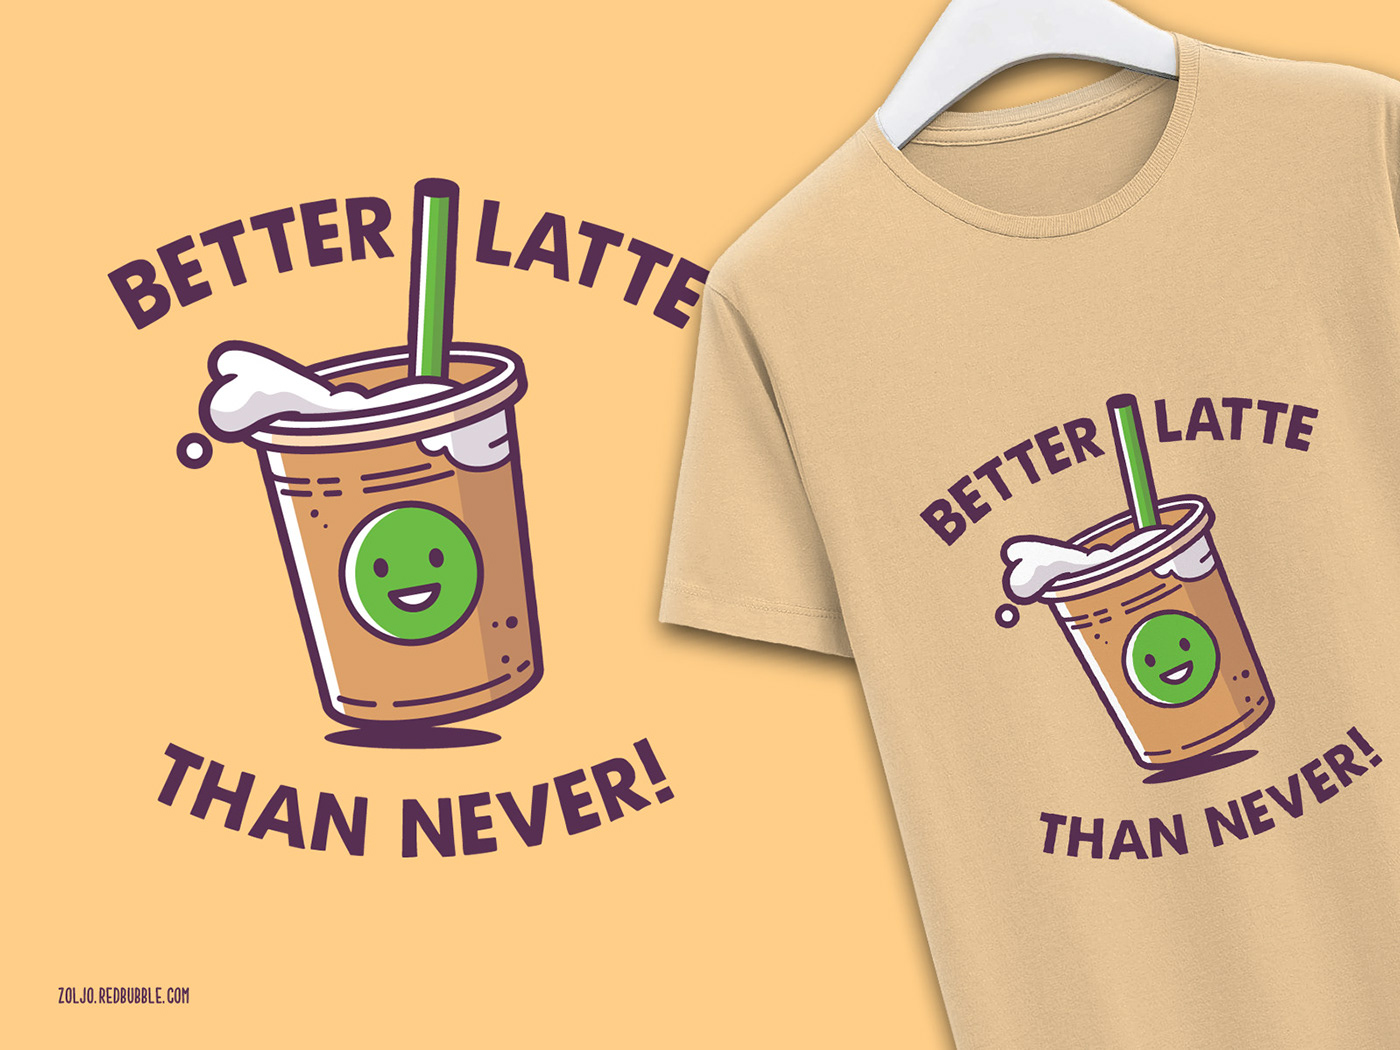 Better Latte than never, Coffee lovers themed illustration for t-shirt design.